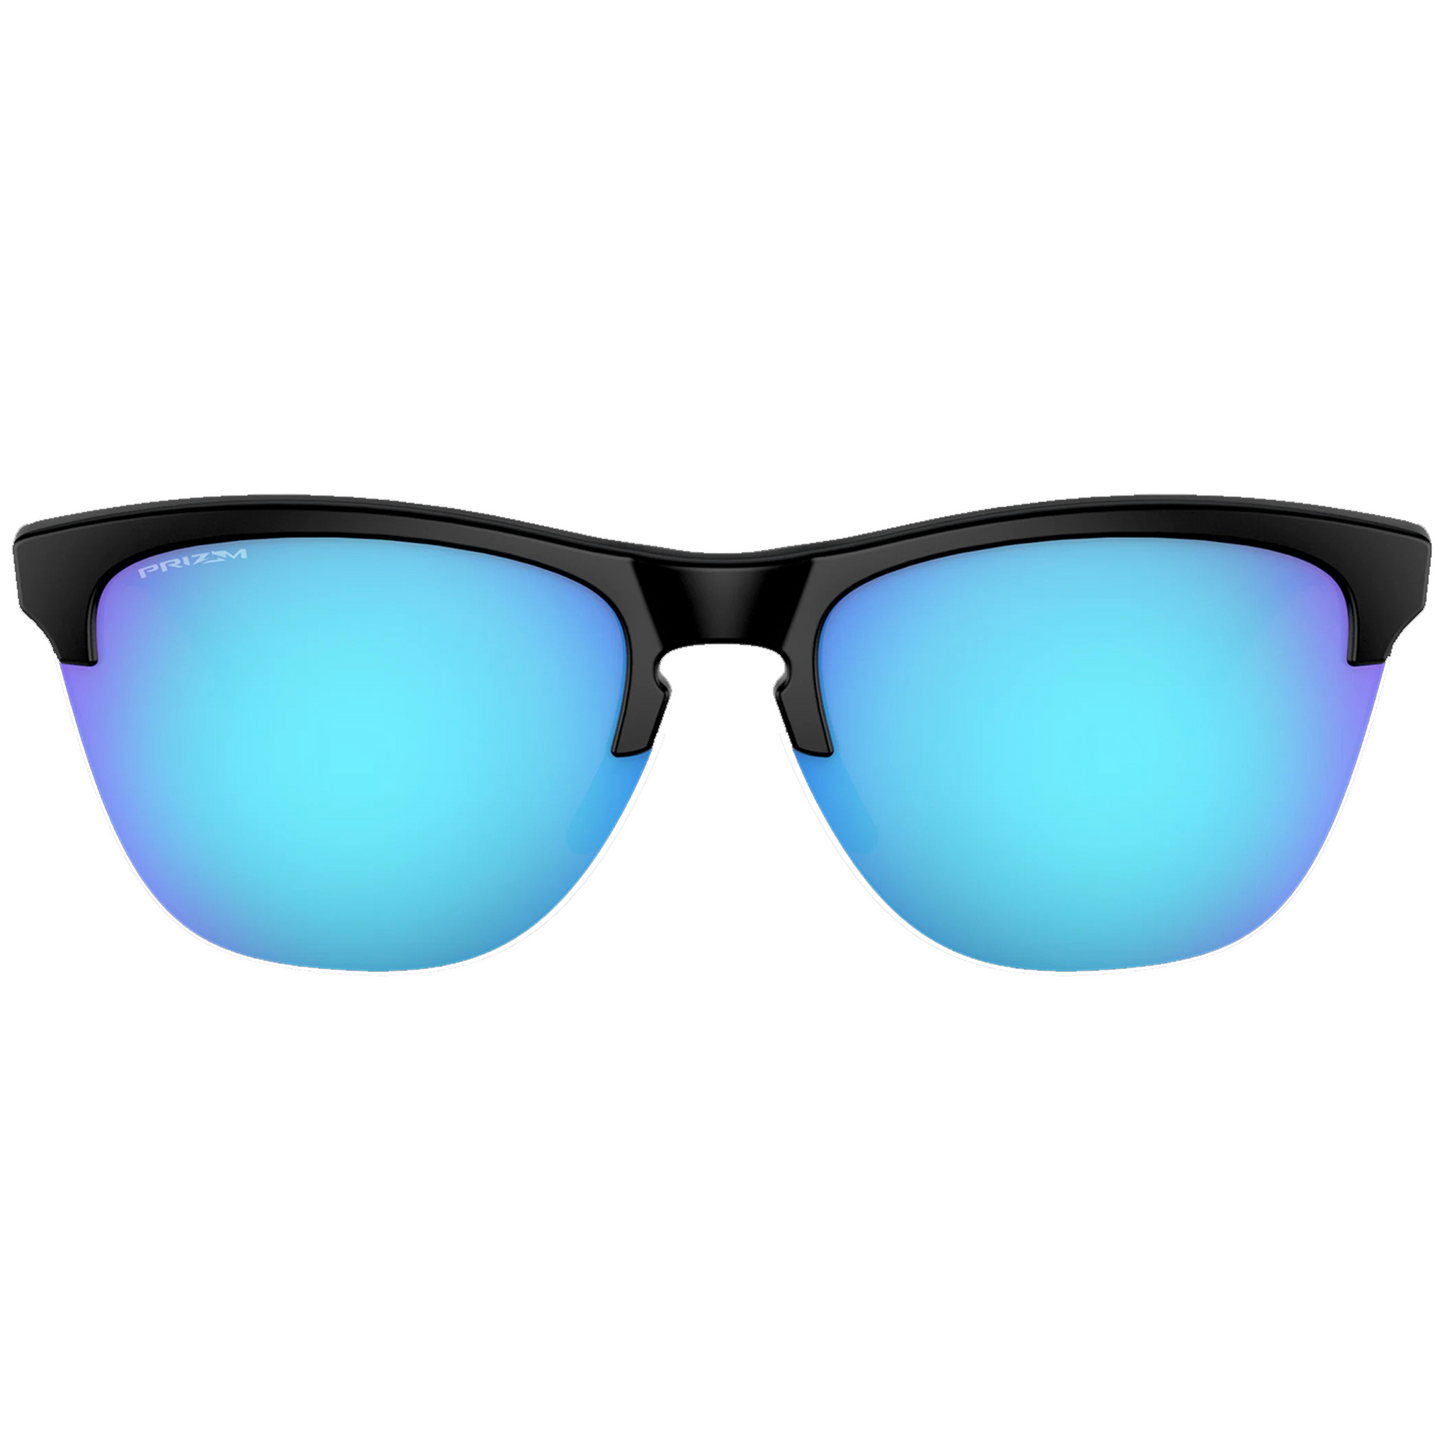 Oakley Frogskins Lite Sunglasses (Matte Black) Prizm Sapphire Lens - Free Case